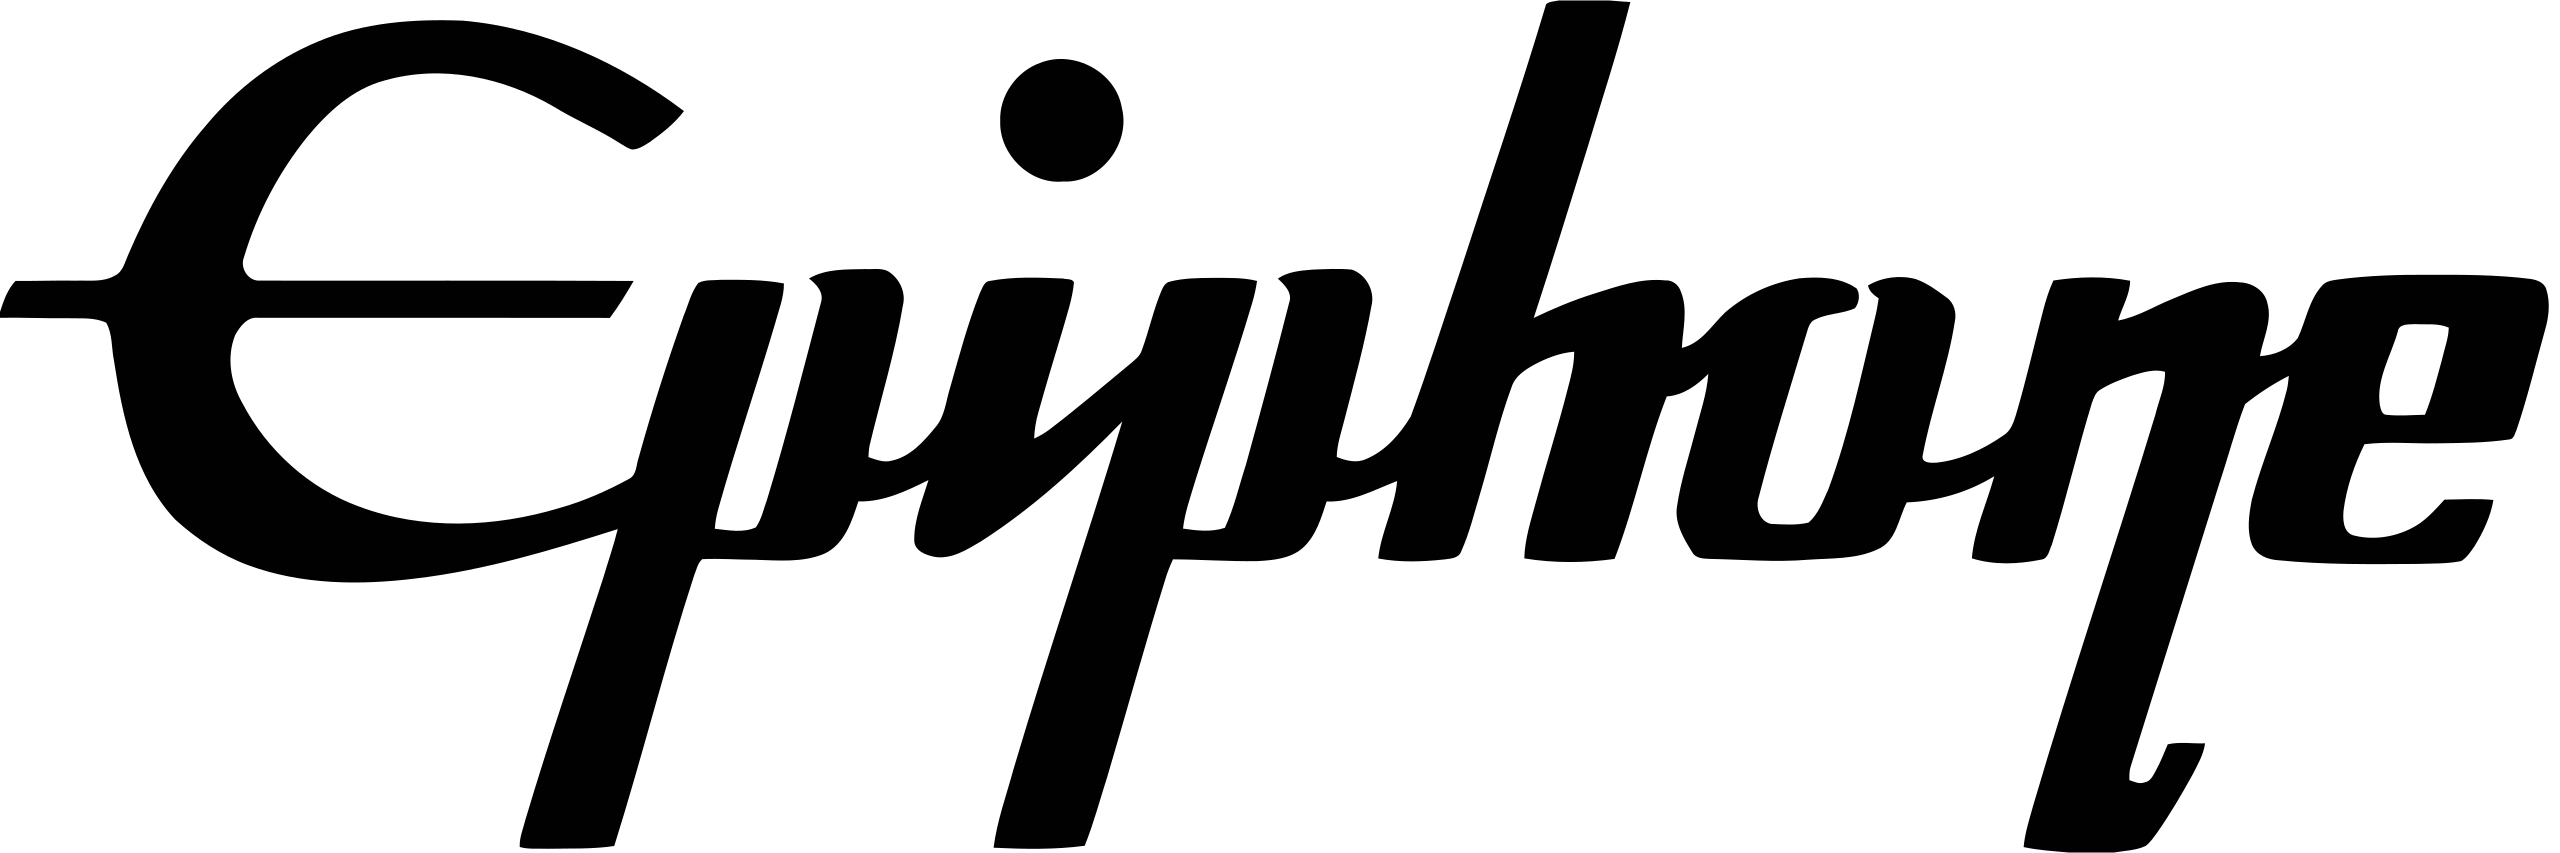 Ephipone guitars logo